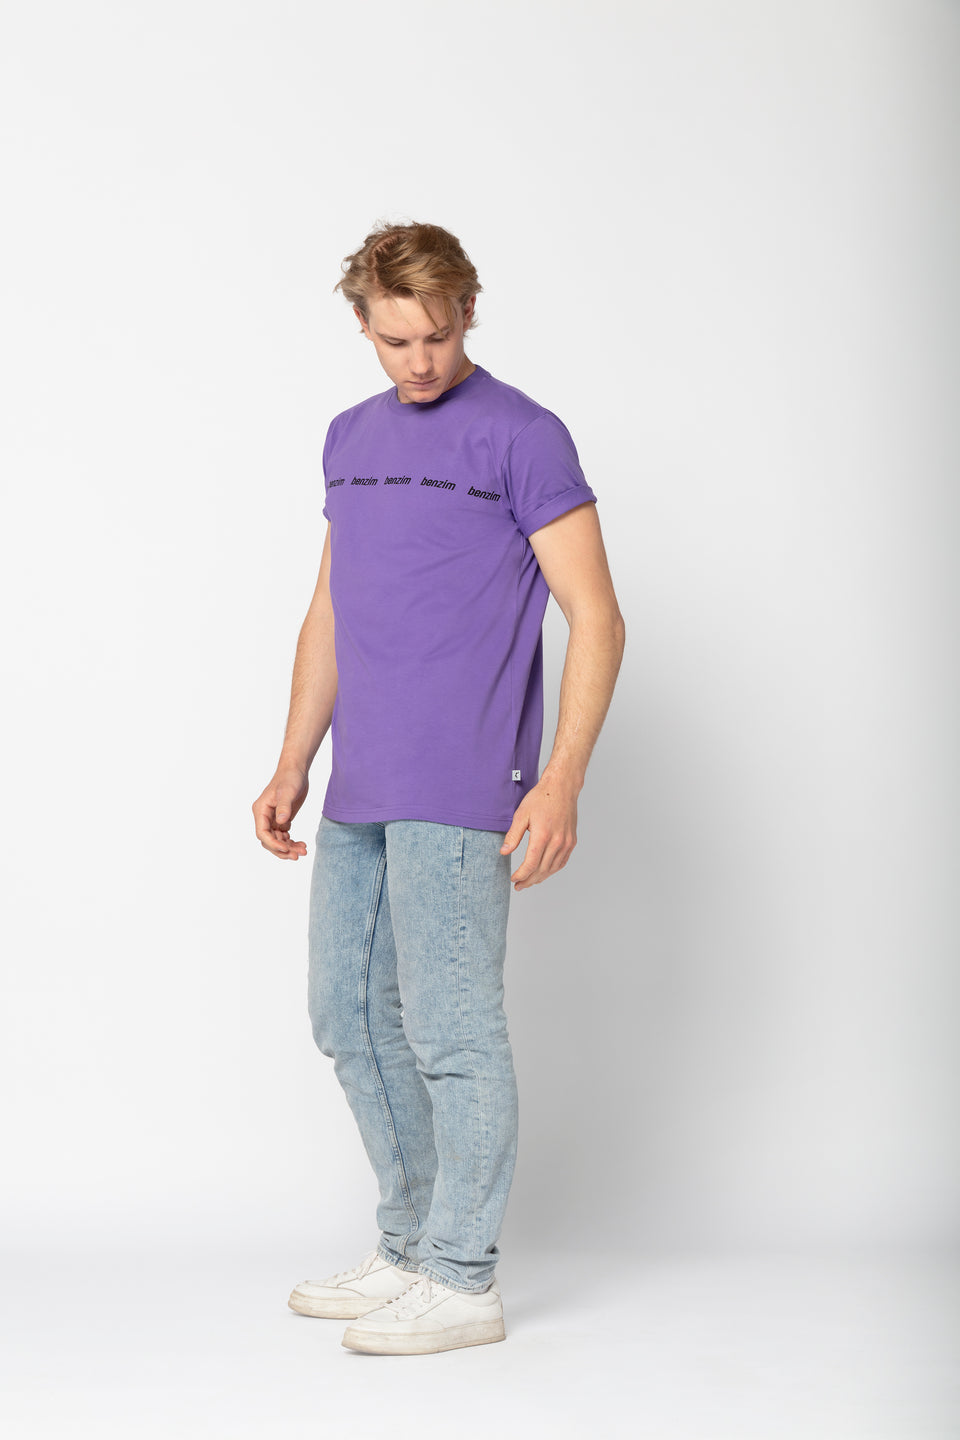 T-Shirt Farbe lila für MX-Sport an Model